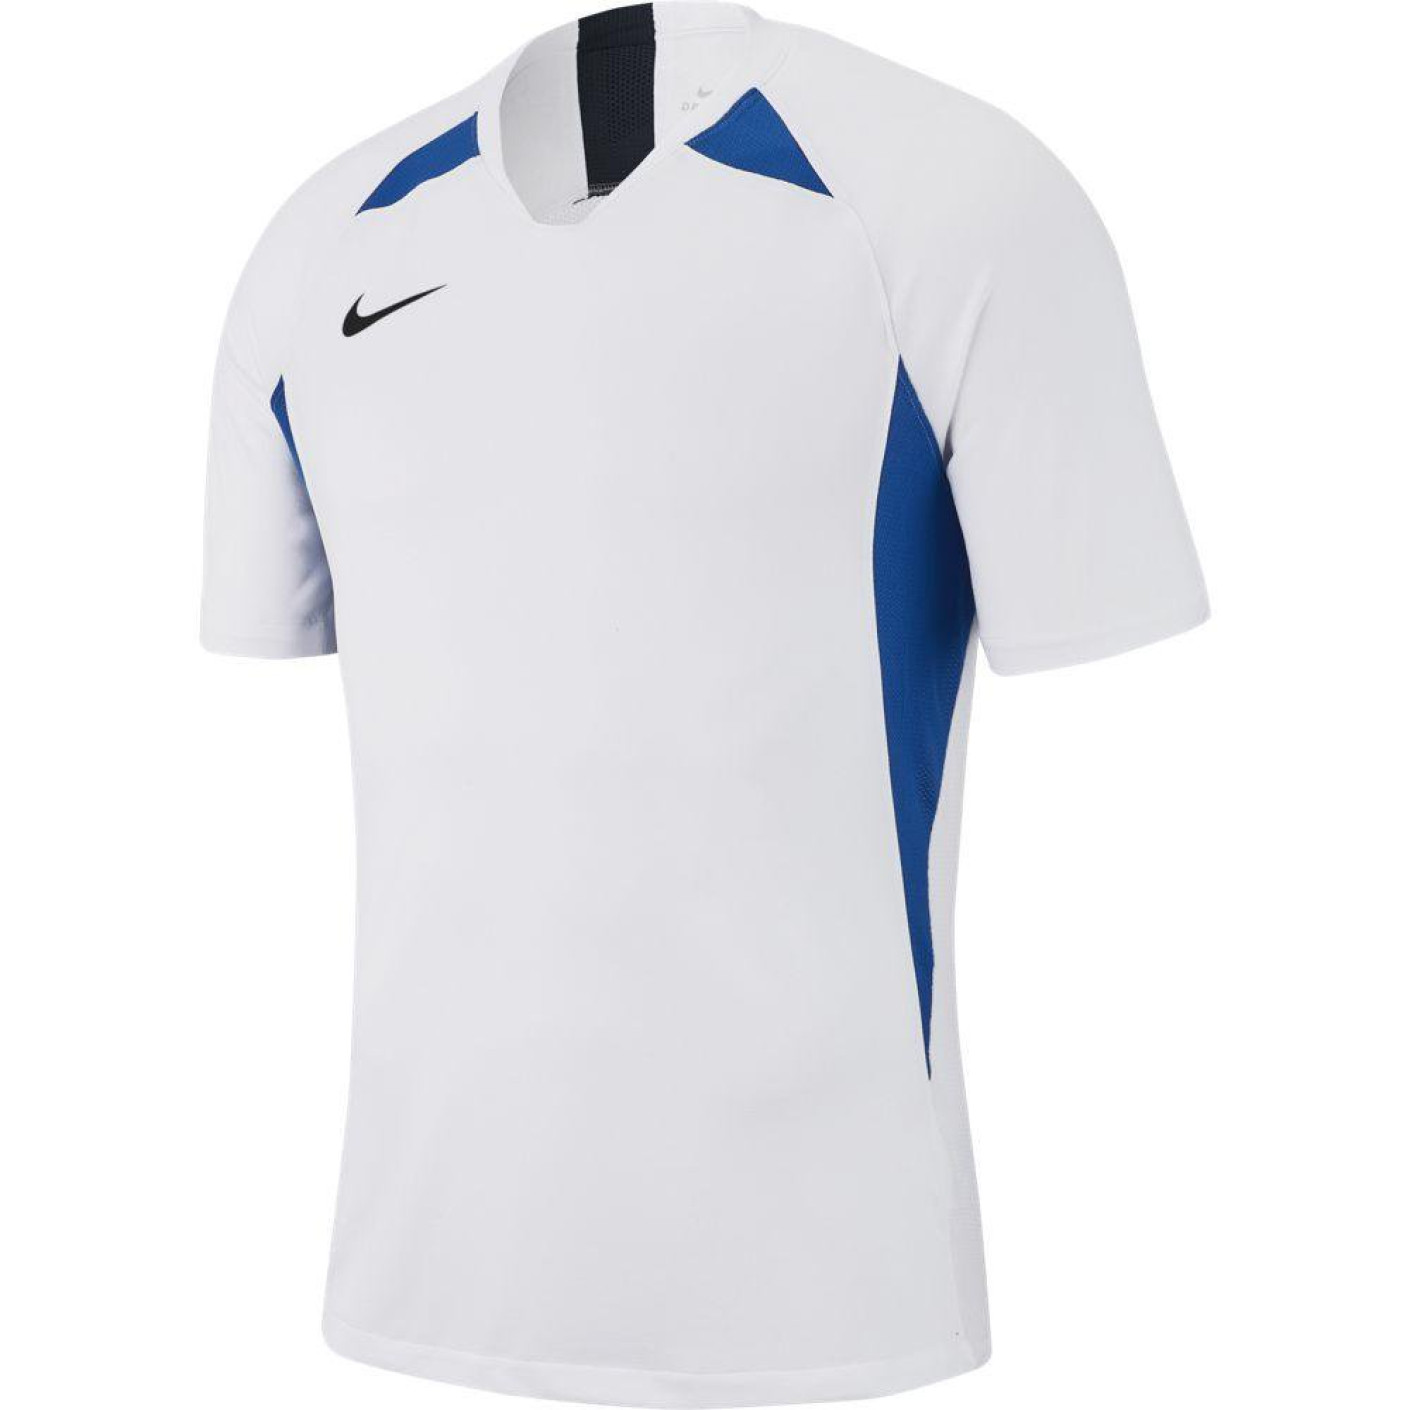 Nike Dry Legend Voetbalshirt Wit Blauw Kids